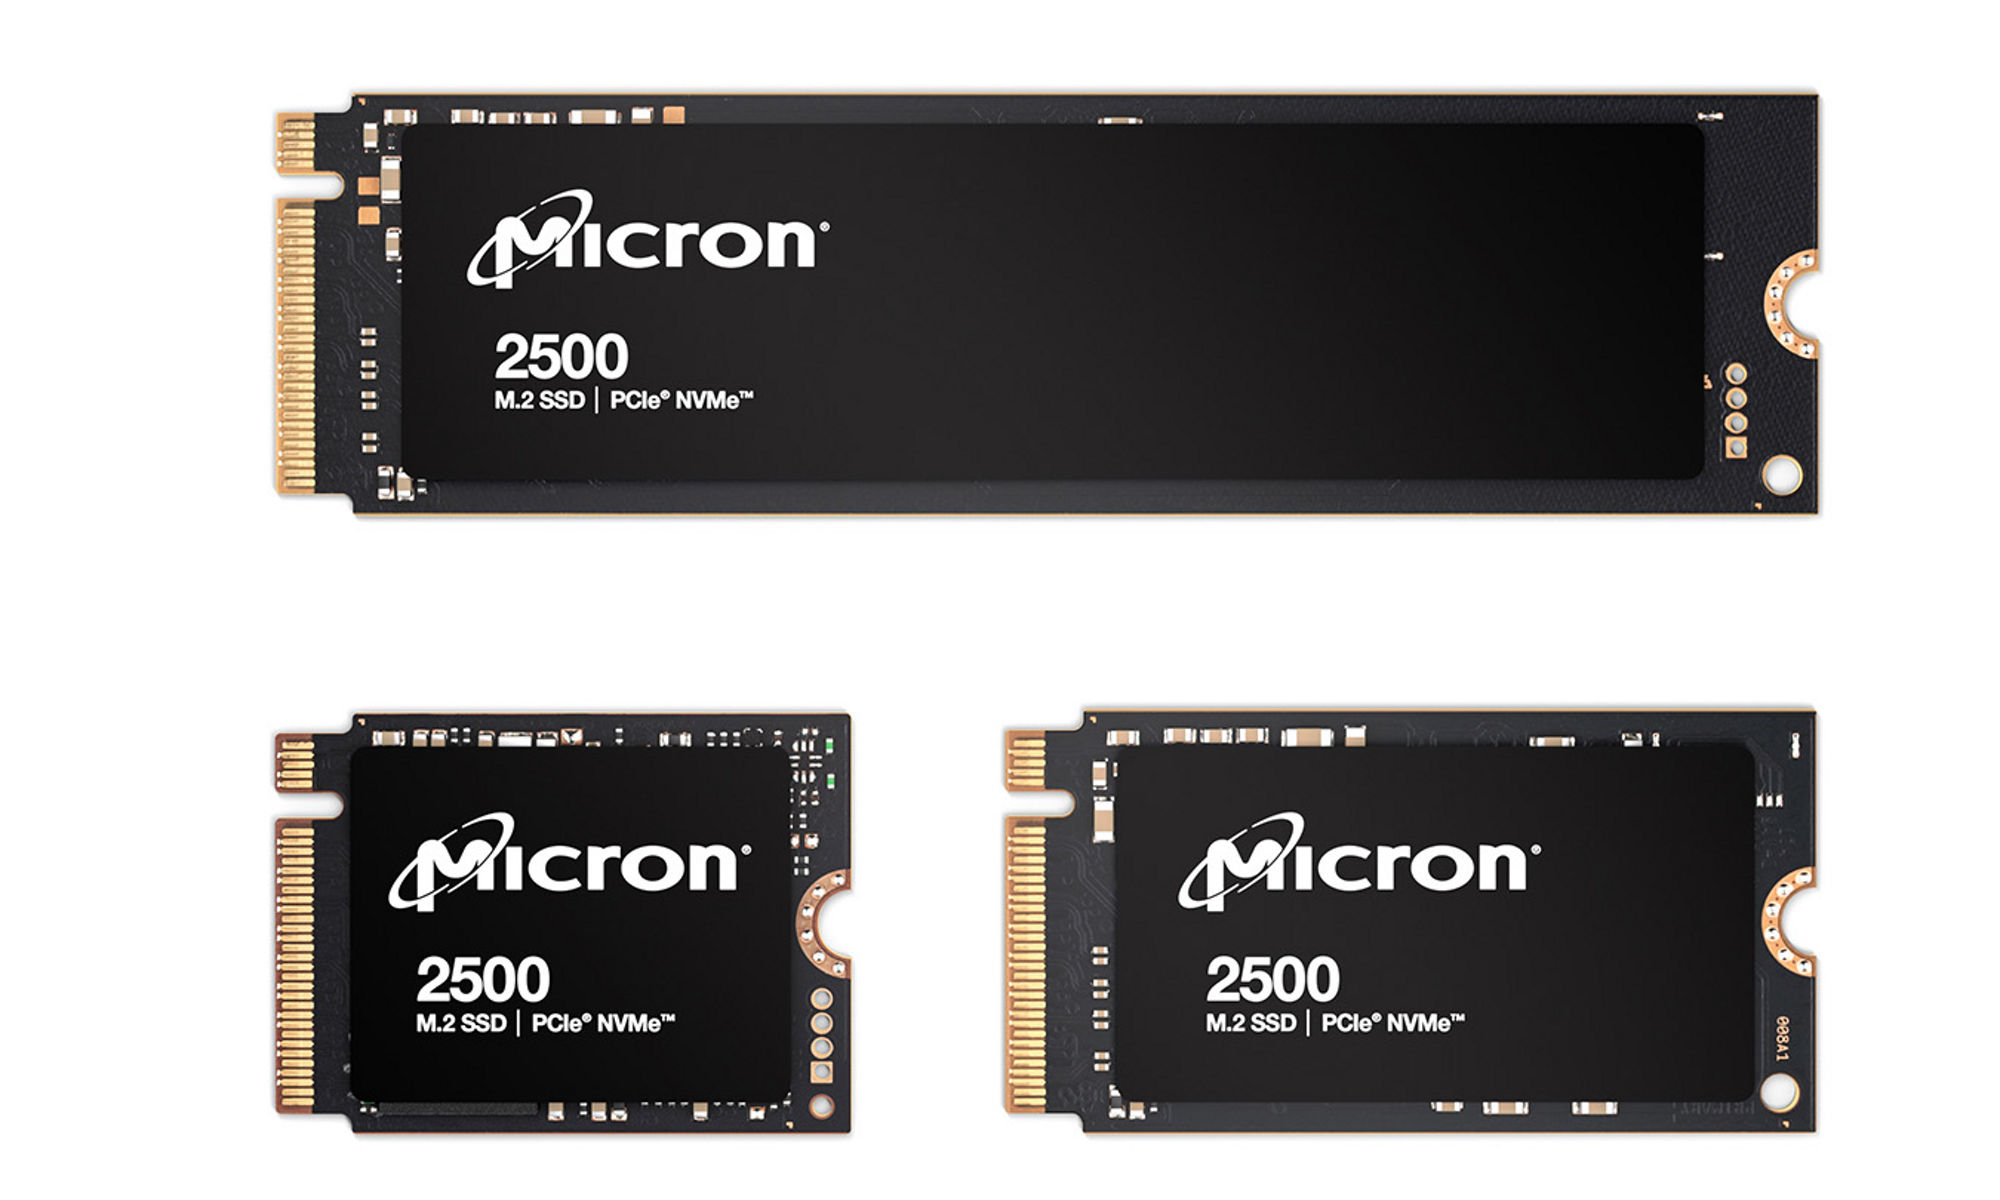 Micron 2500 SSDs